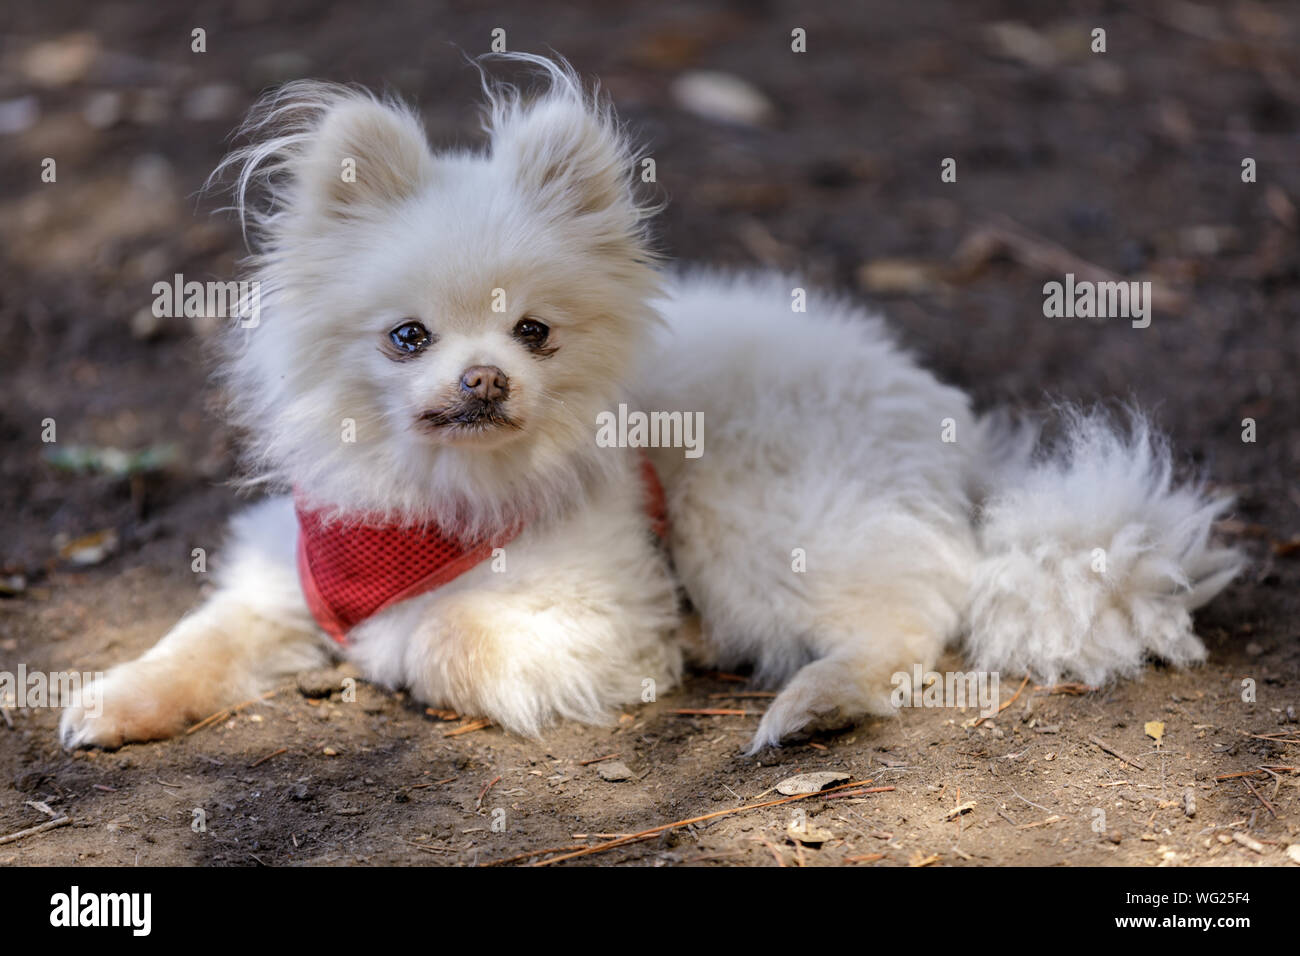 Adult White Female Pomeranian Portrait. Stock Photo